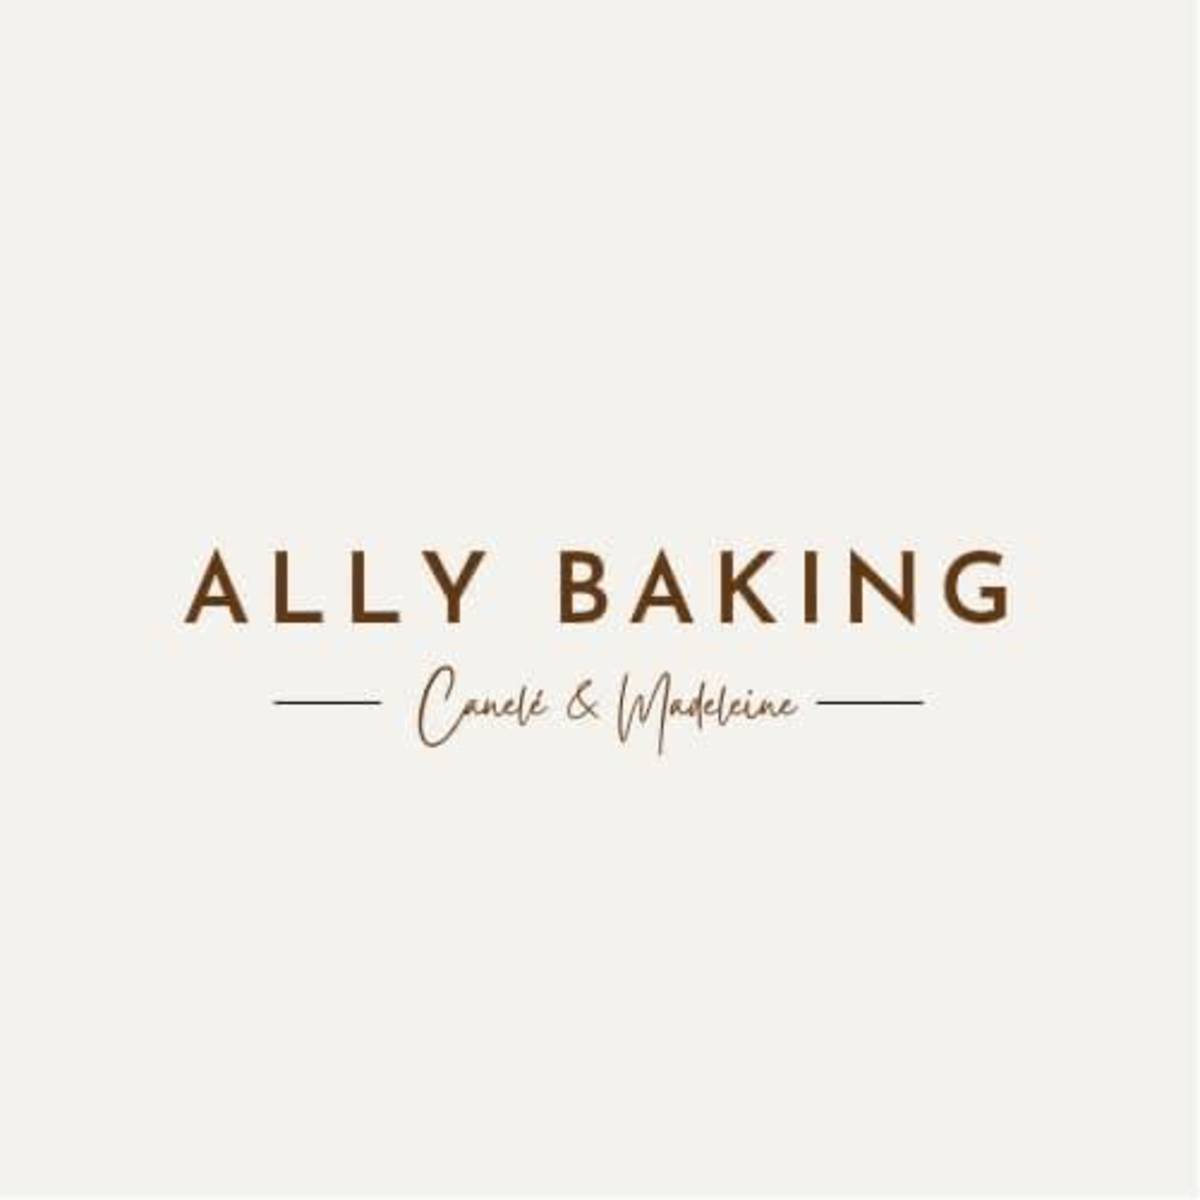 Ally baking 製甜所